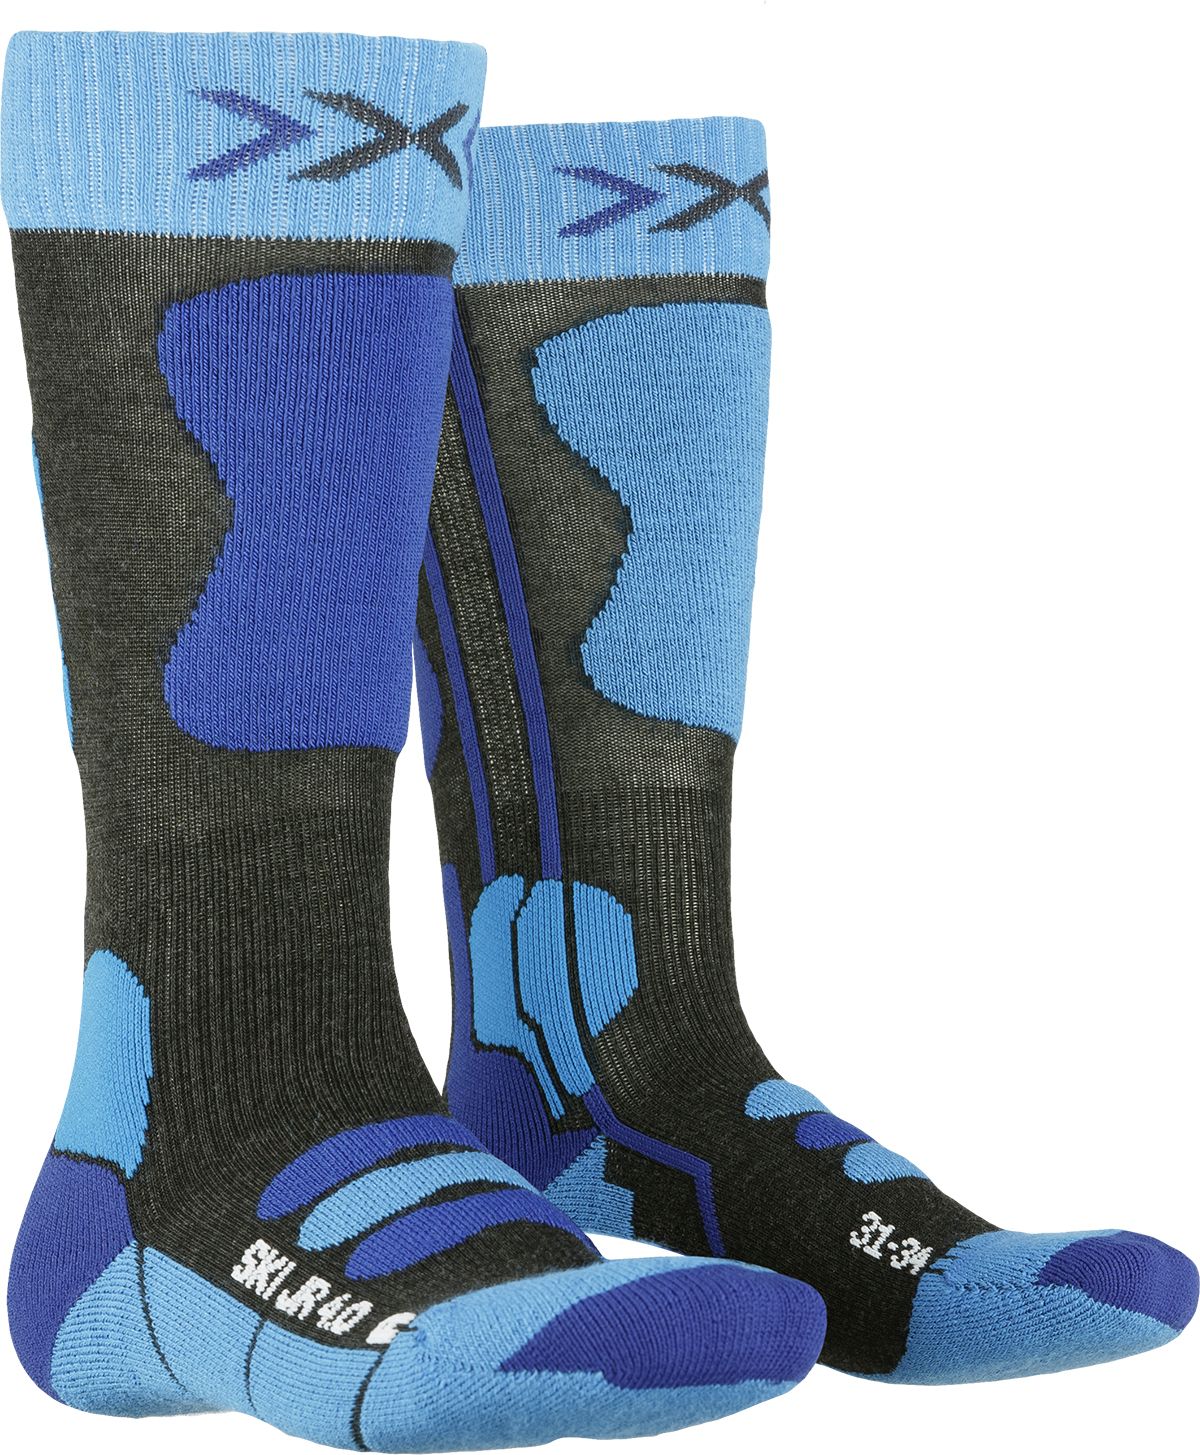 X-Socks Ski Junior 4.0 - anthracite melange/electric blue 27-30